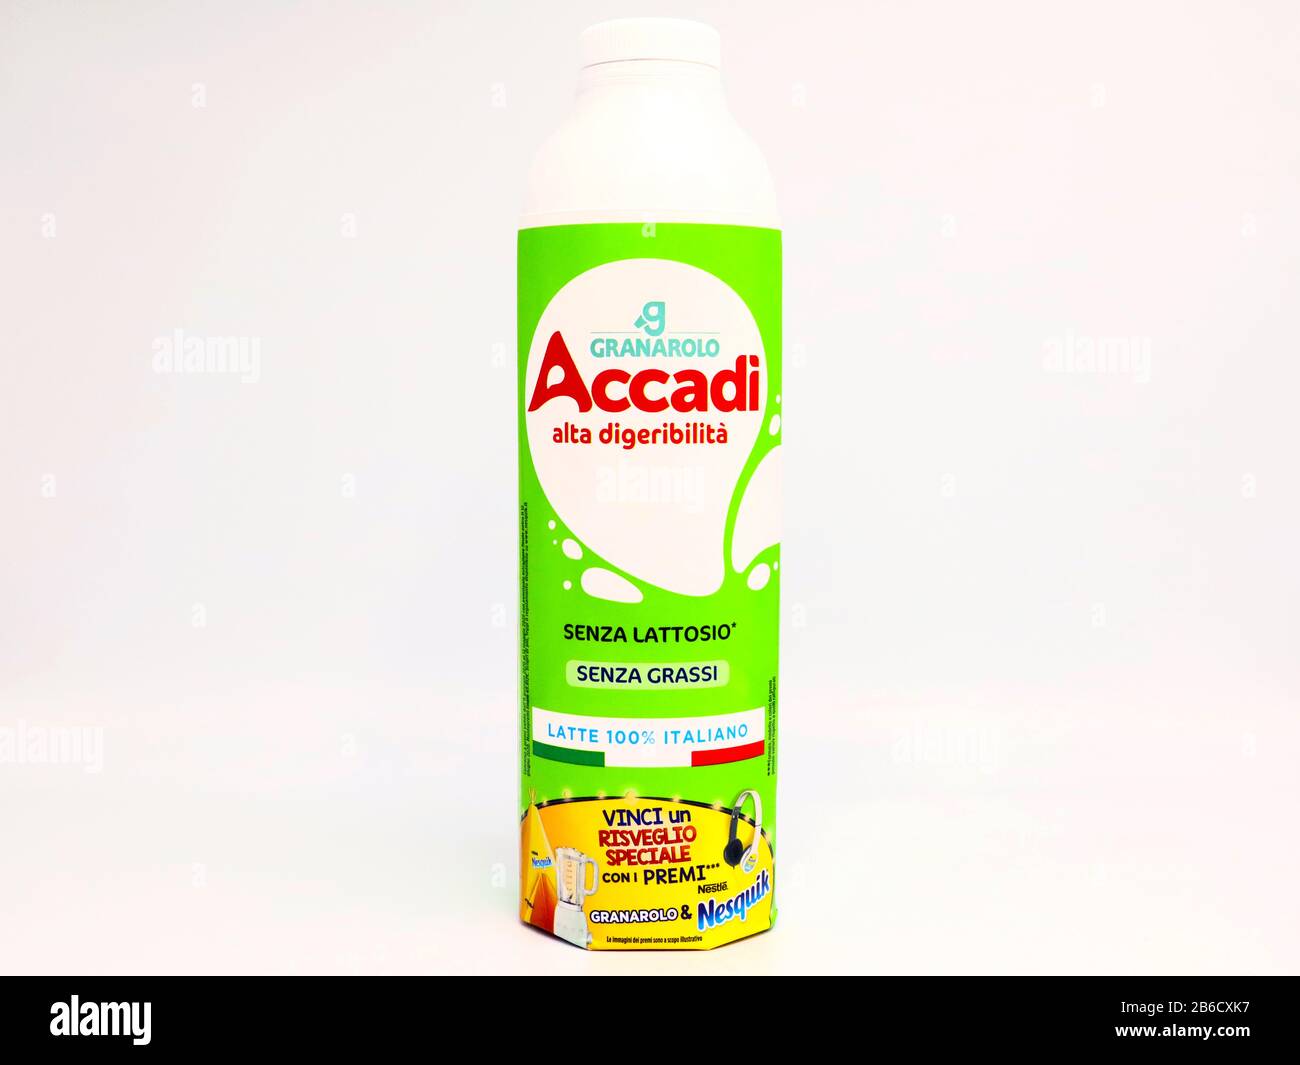 Accadì Lactose Free, fat free, Italian Milk produced by Granarolo Stock  Photo - Alamy